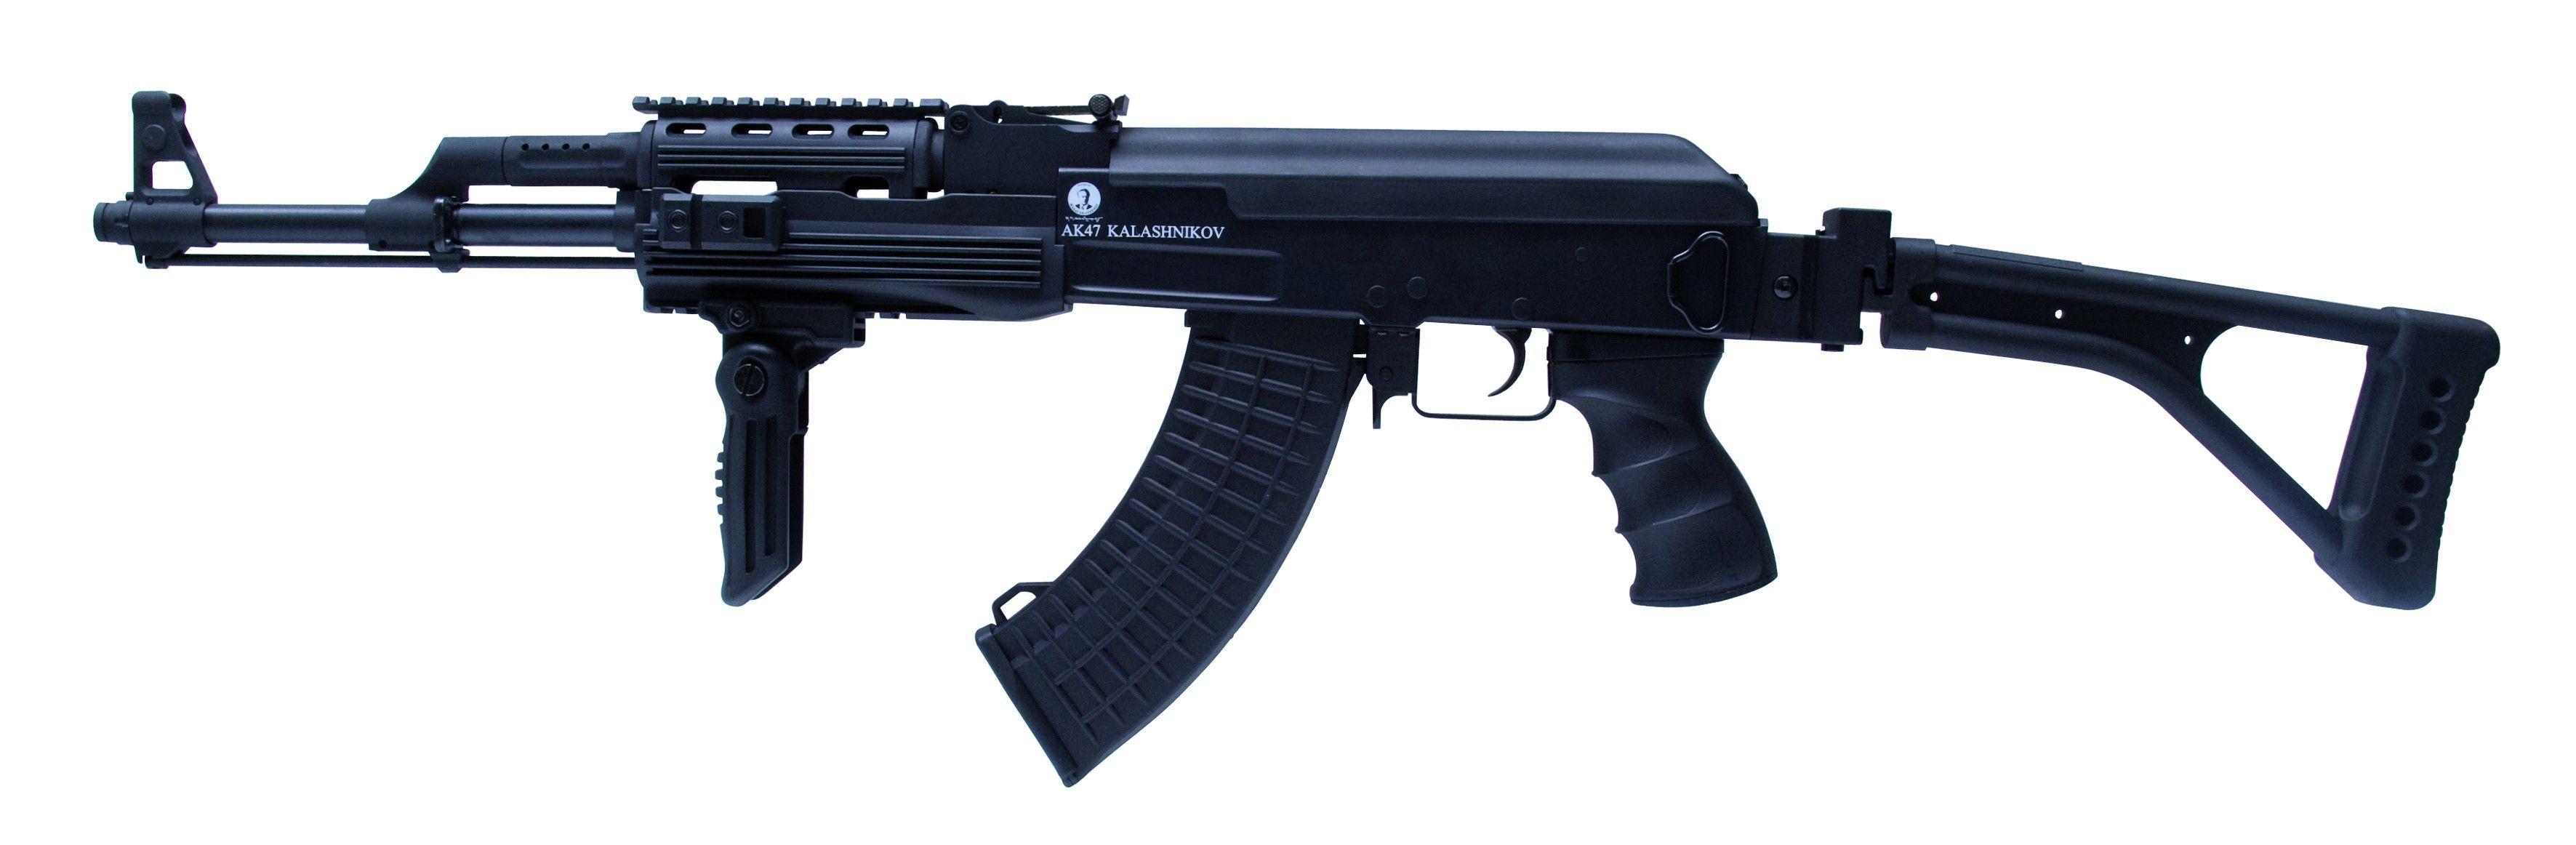 Free Download New AK 47 Gun Image